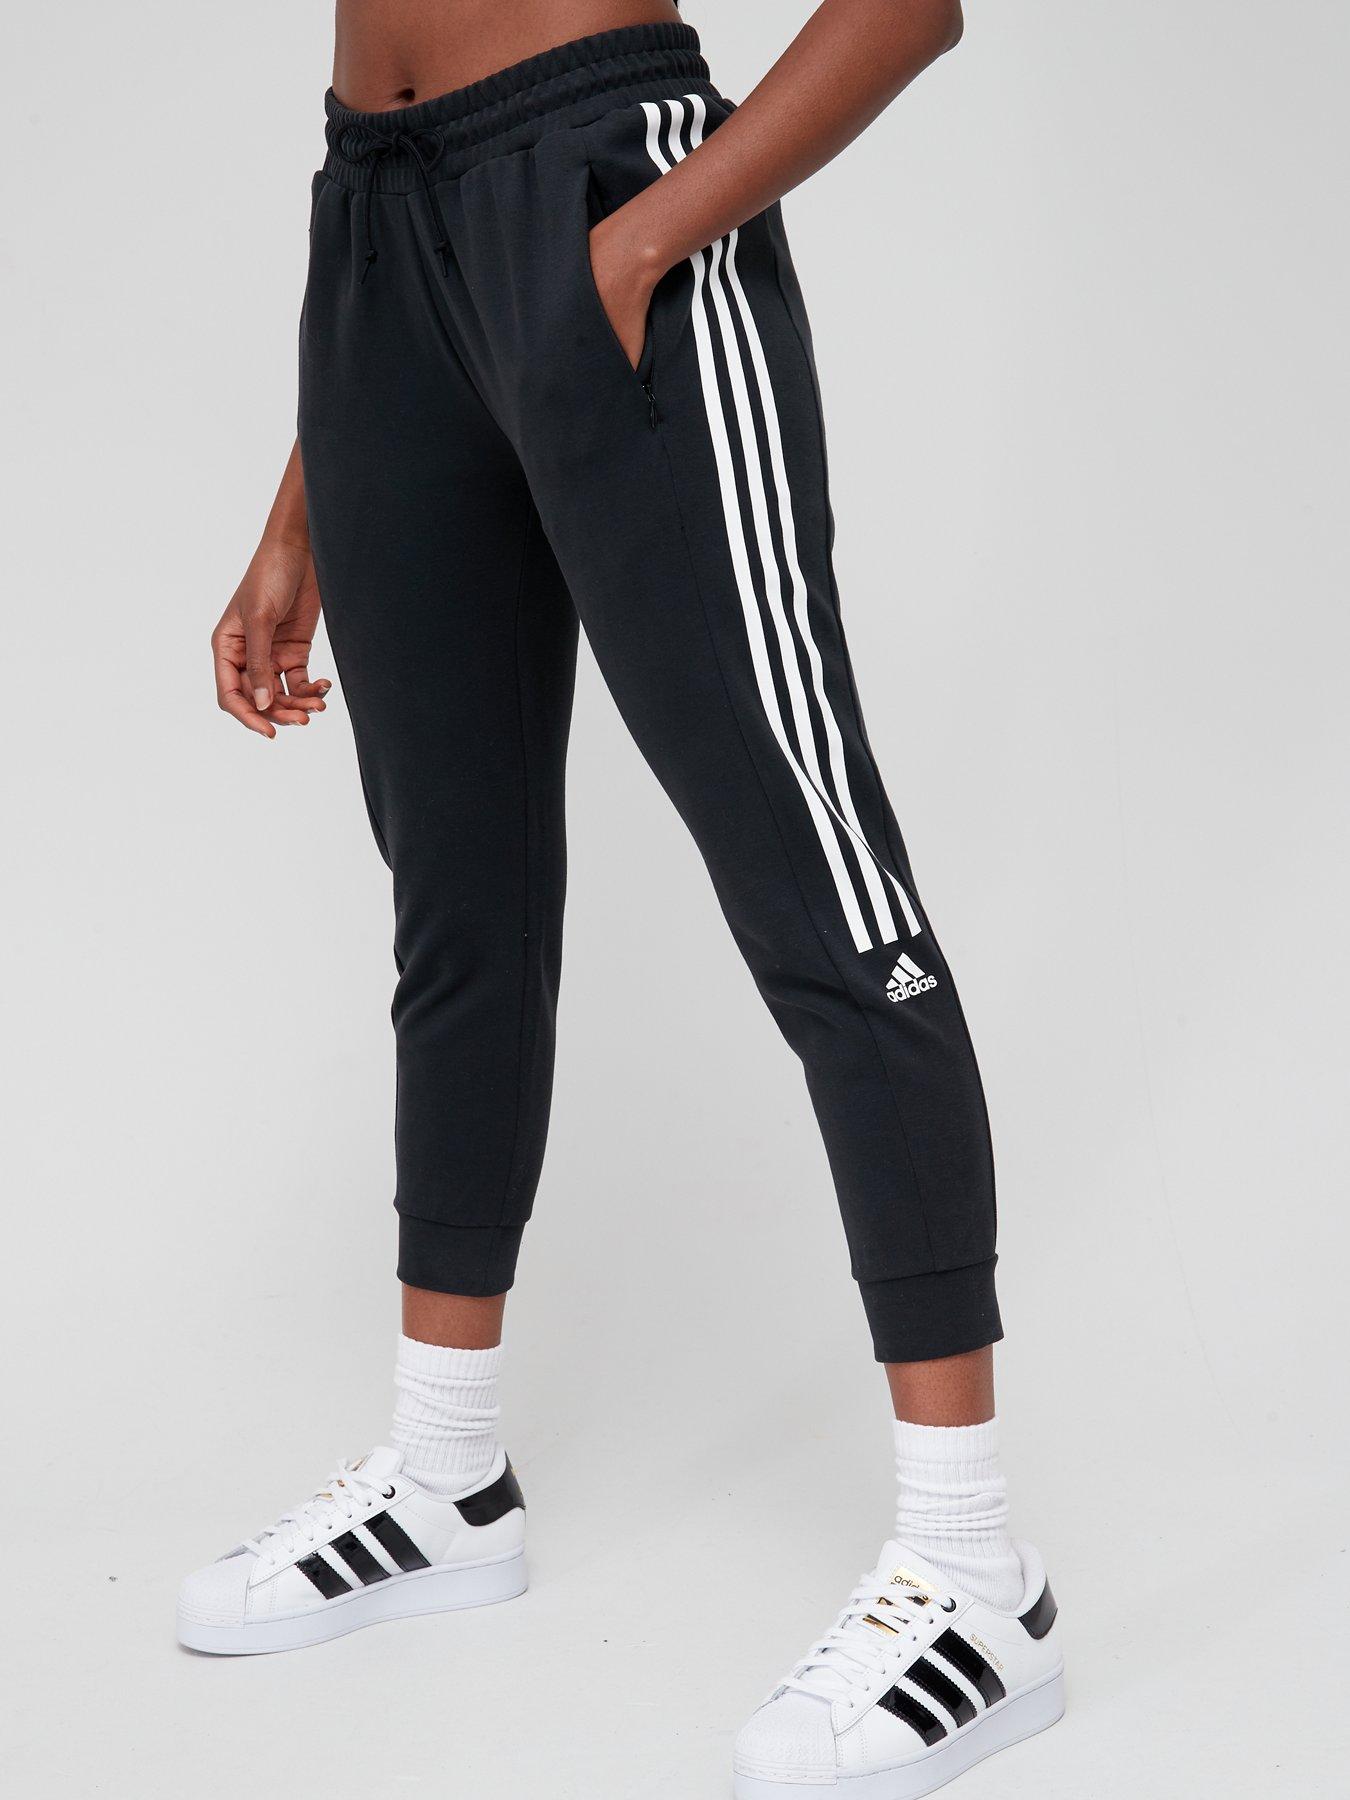 Black S discount 64% Adidas Leggings WOMEN FASHION Trousers Sports 